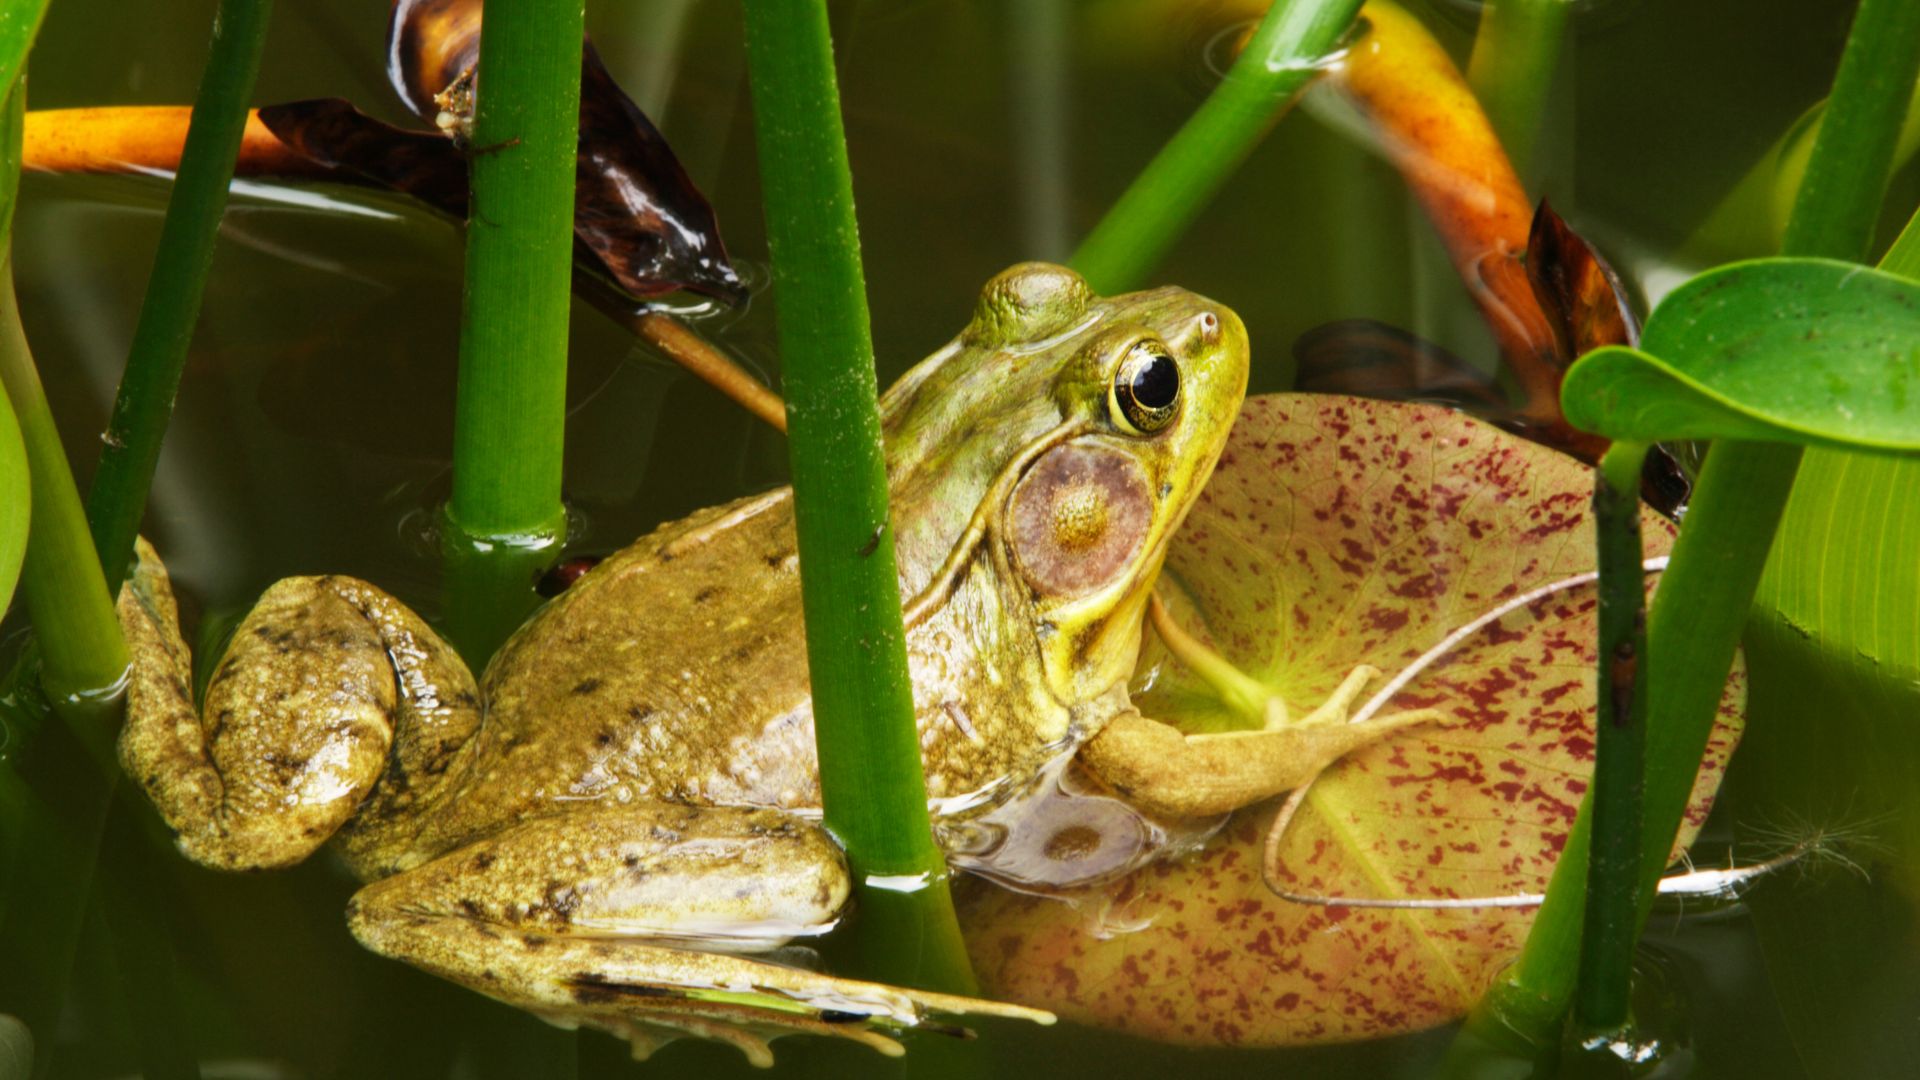 A Short Introduction to Amphibians